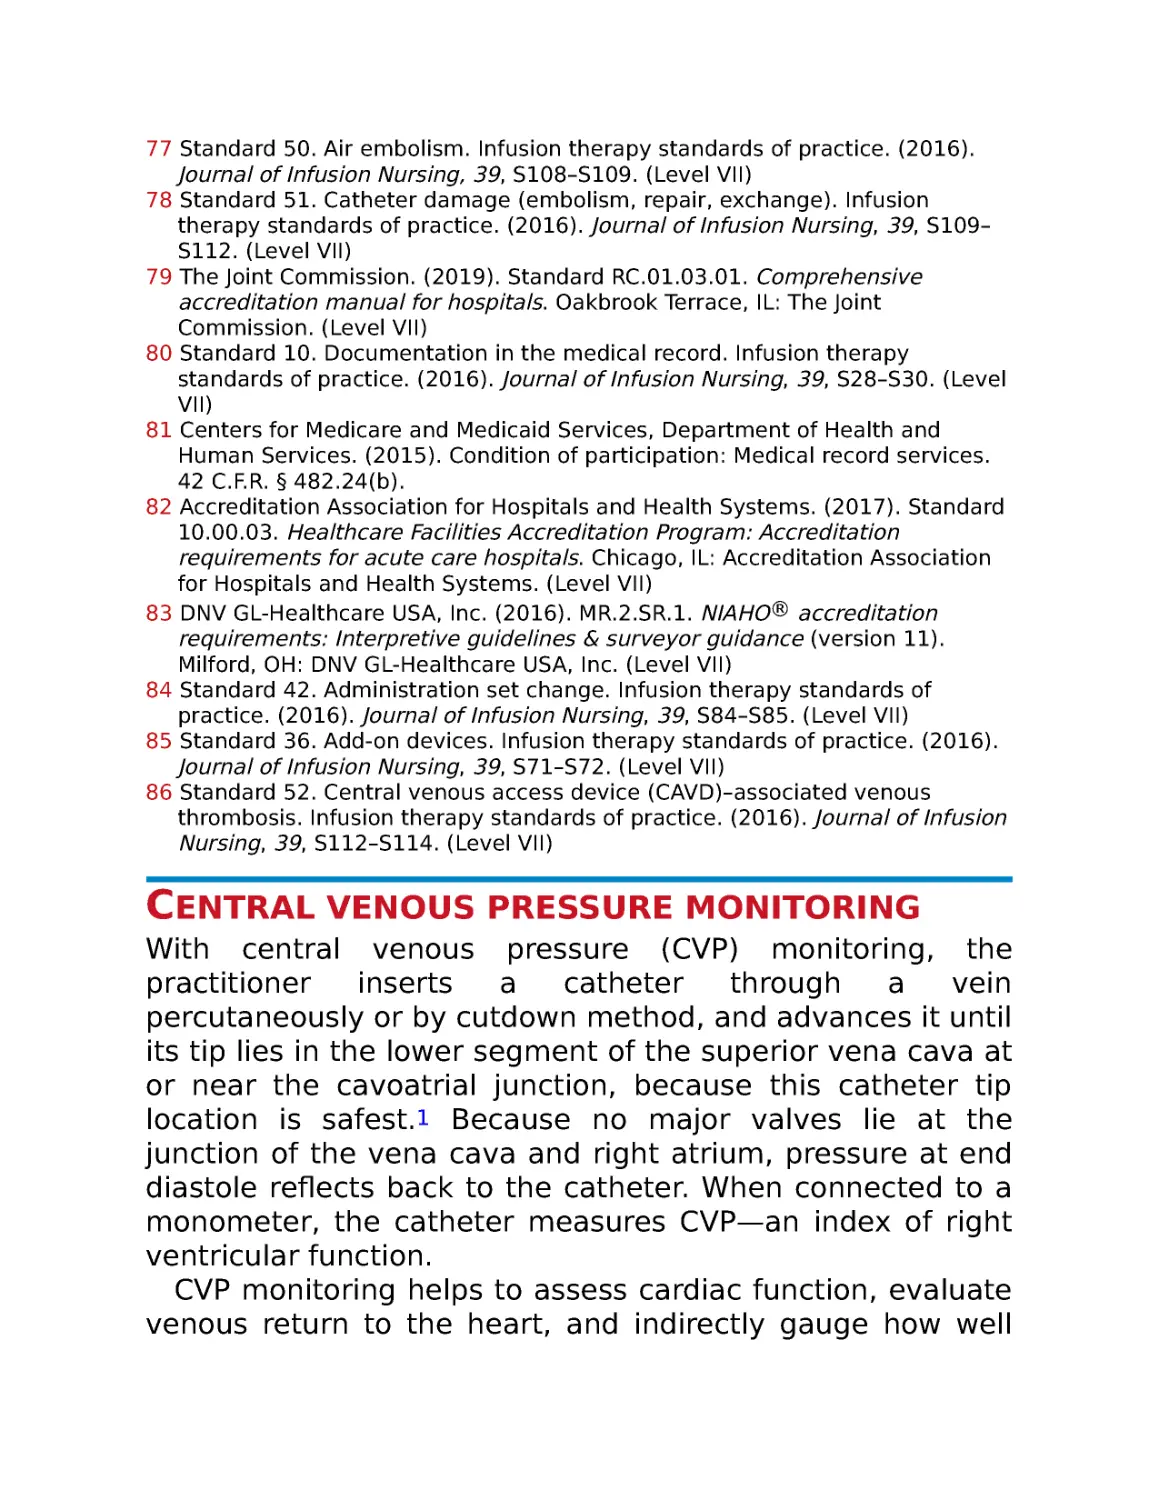 Central venous pressure monitoring